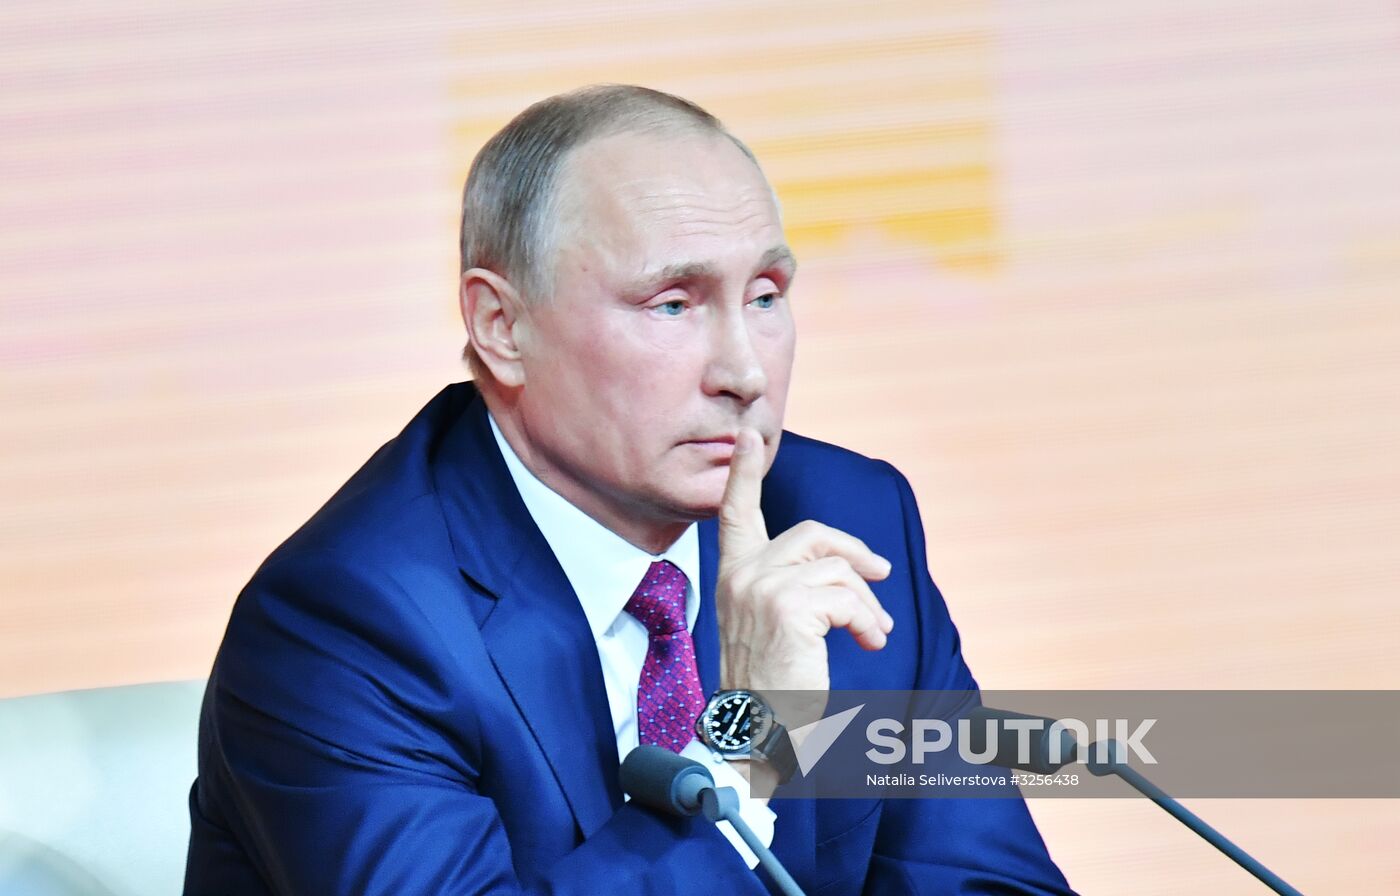 President Vladimir Putin's annual news conference